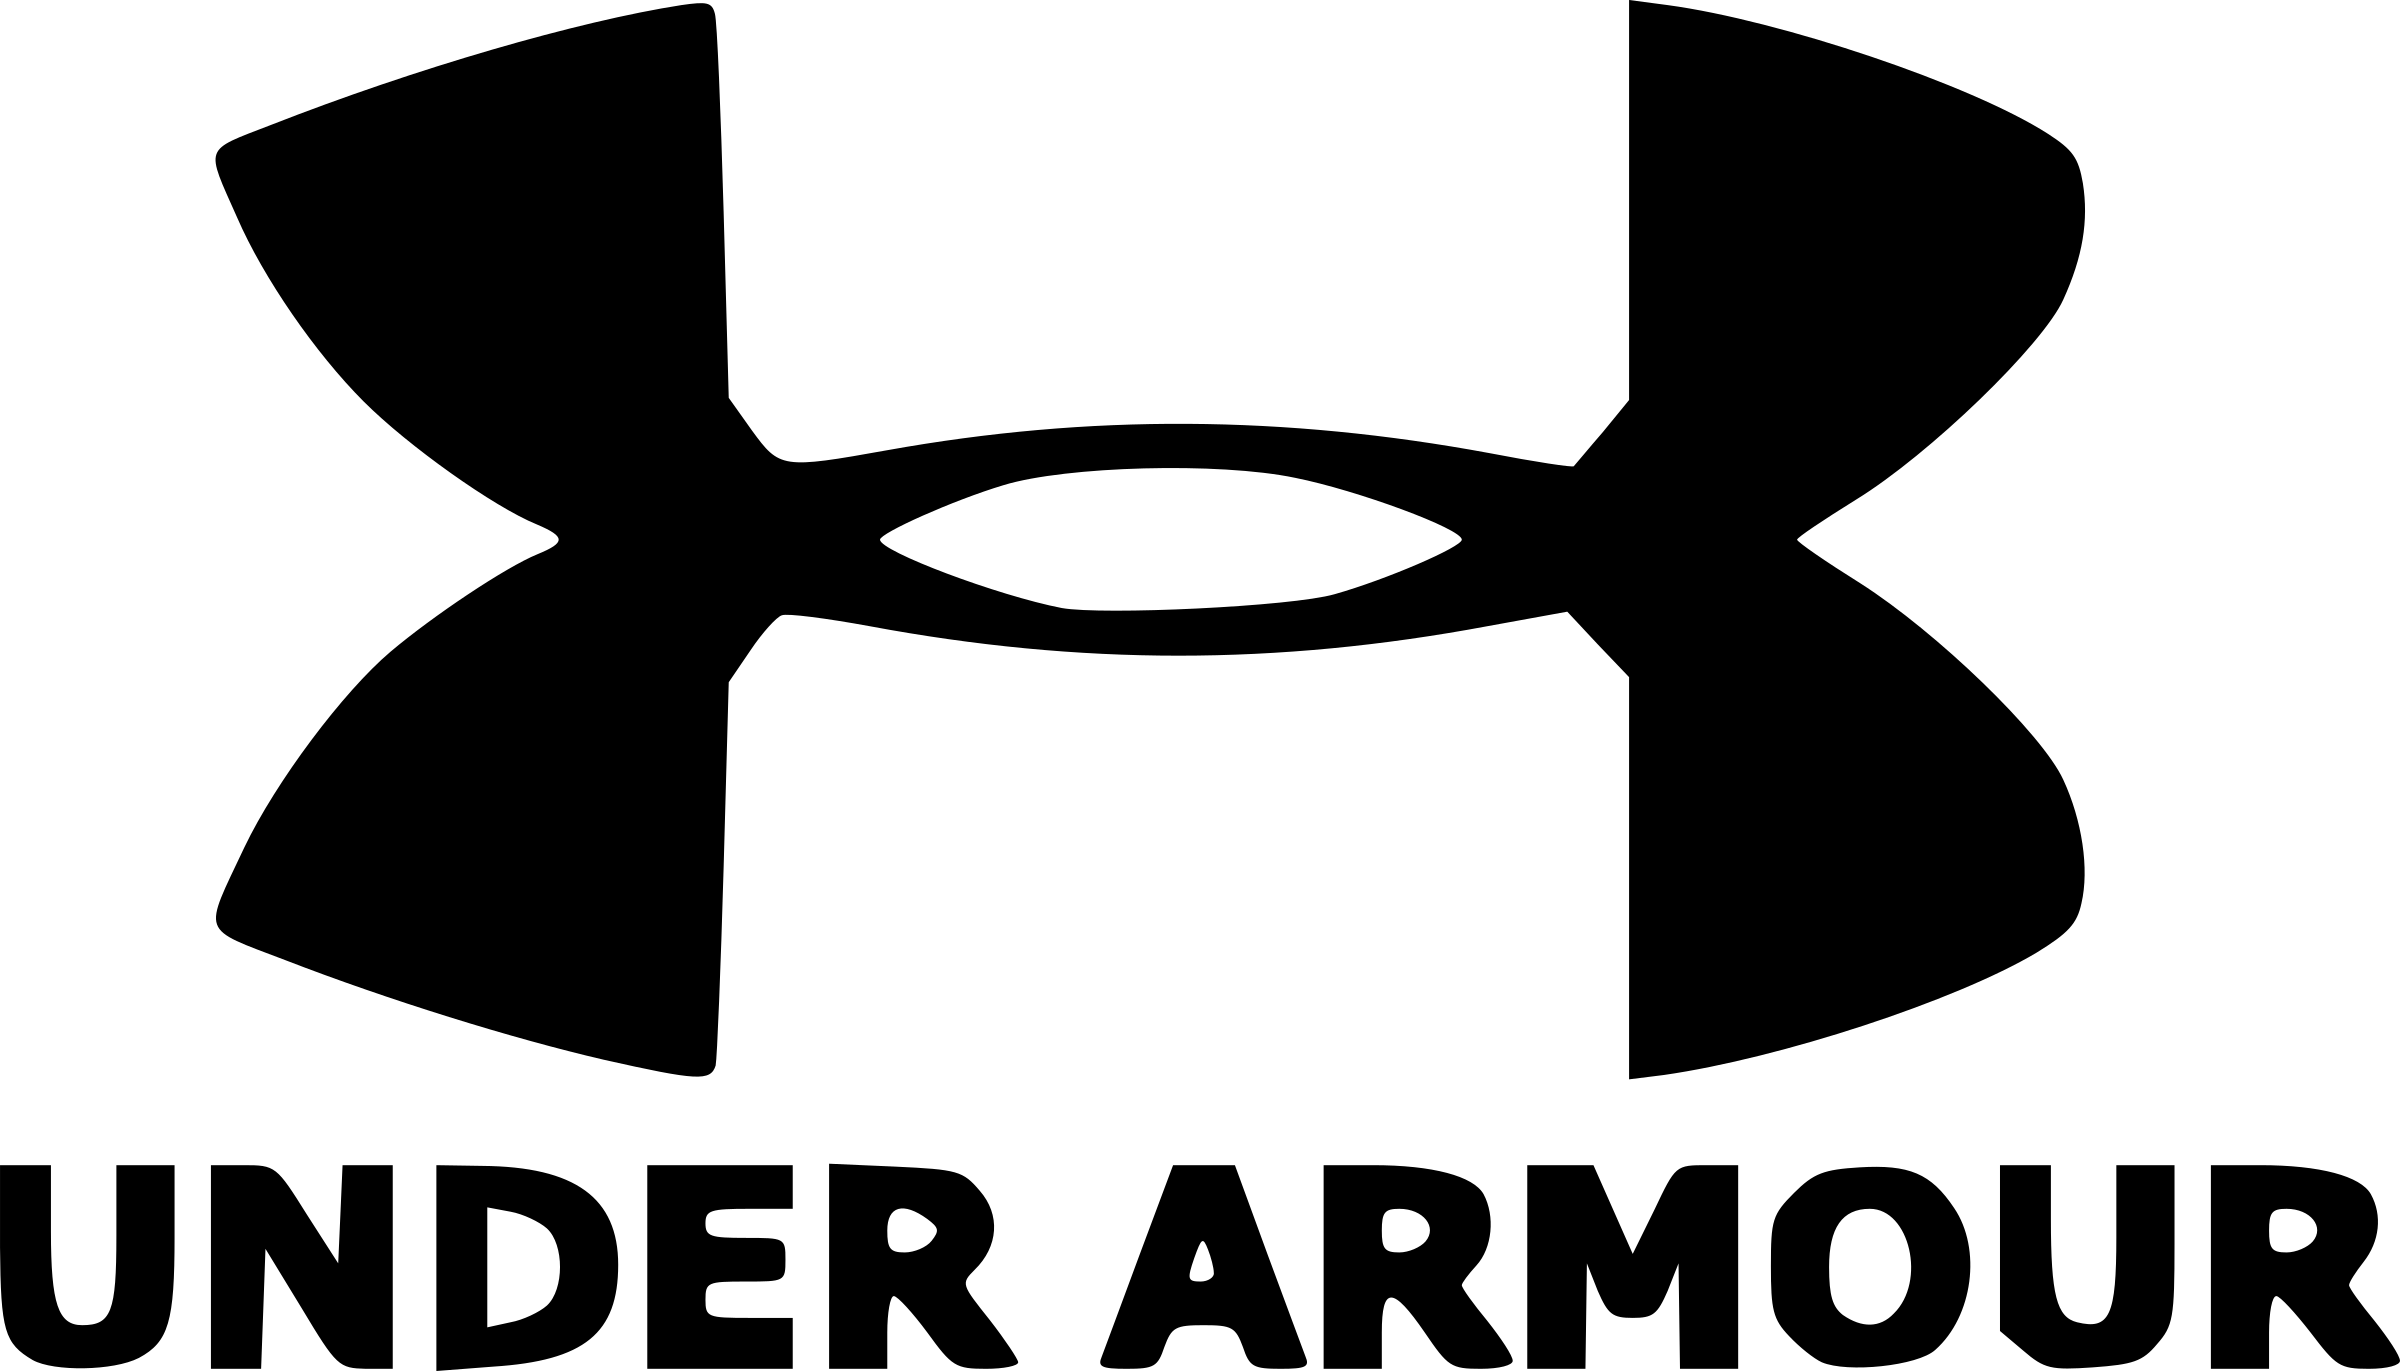 Under Armour Logo Transparent PNG